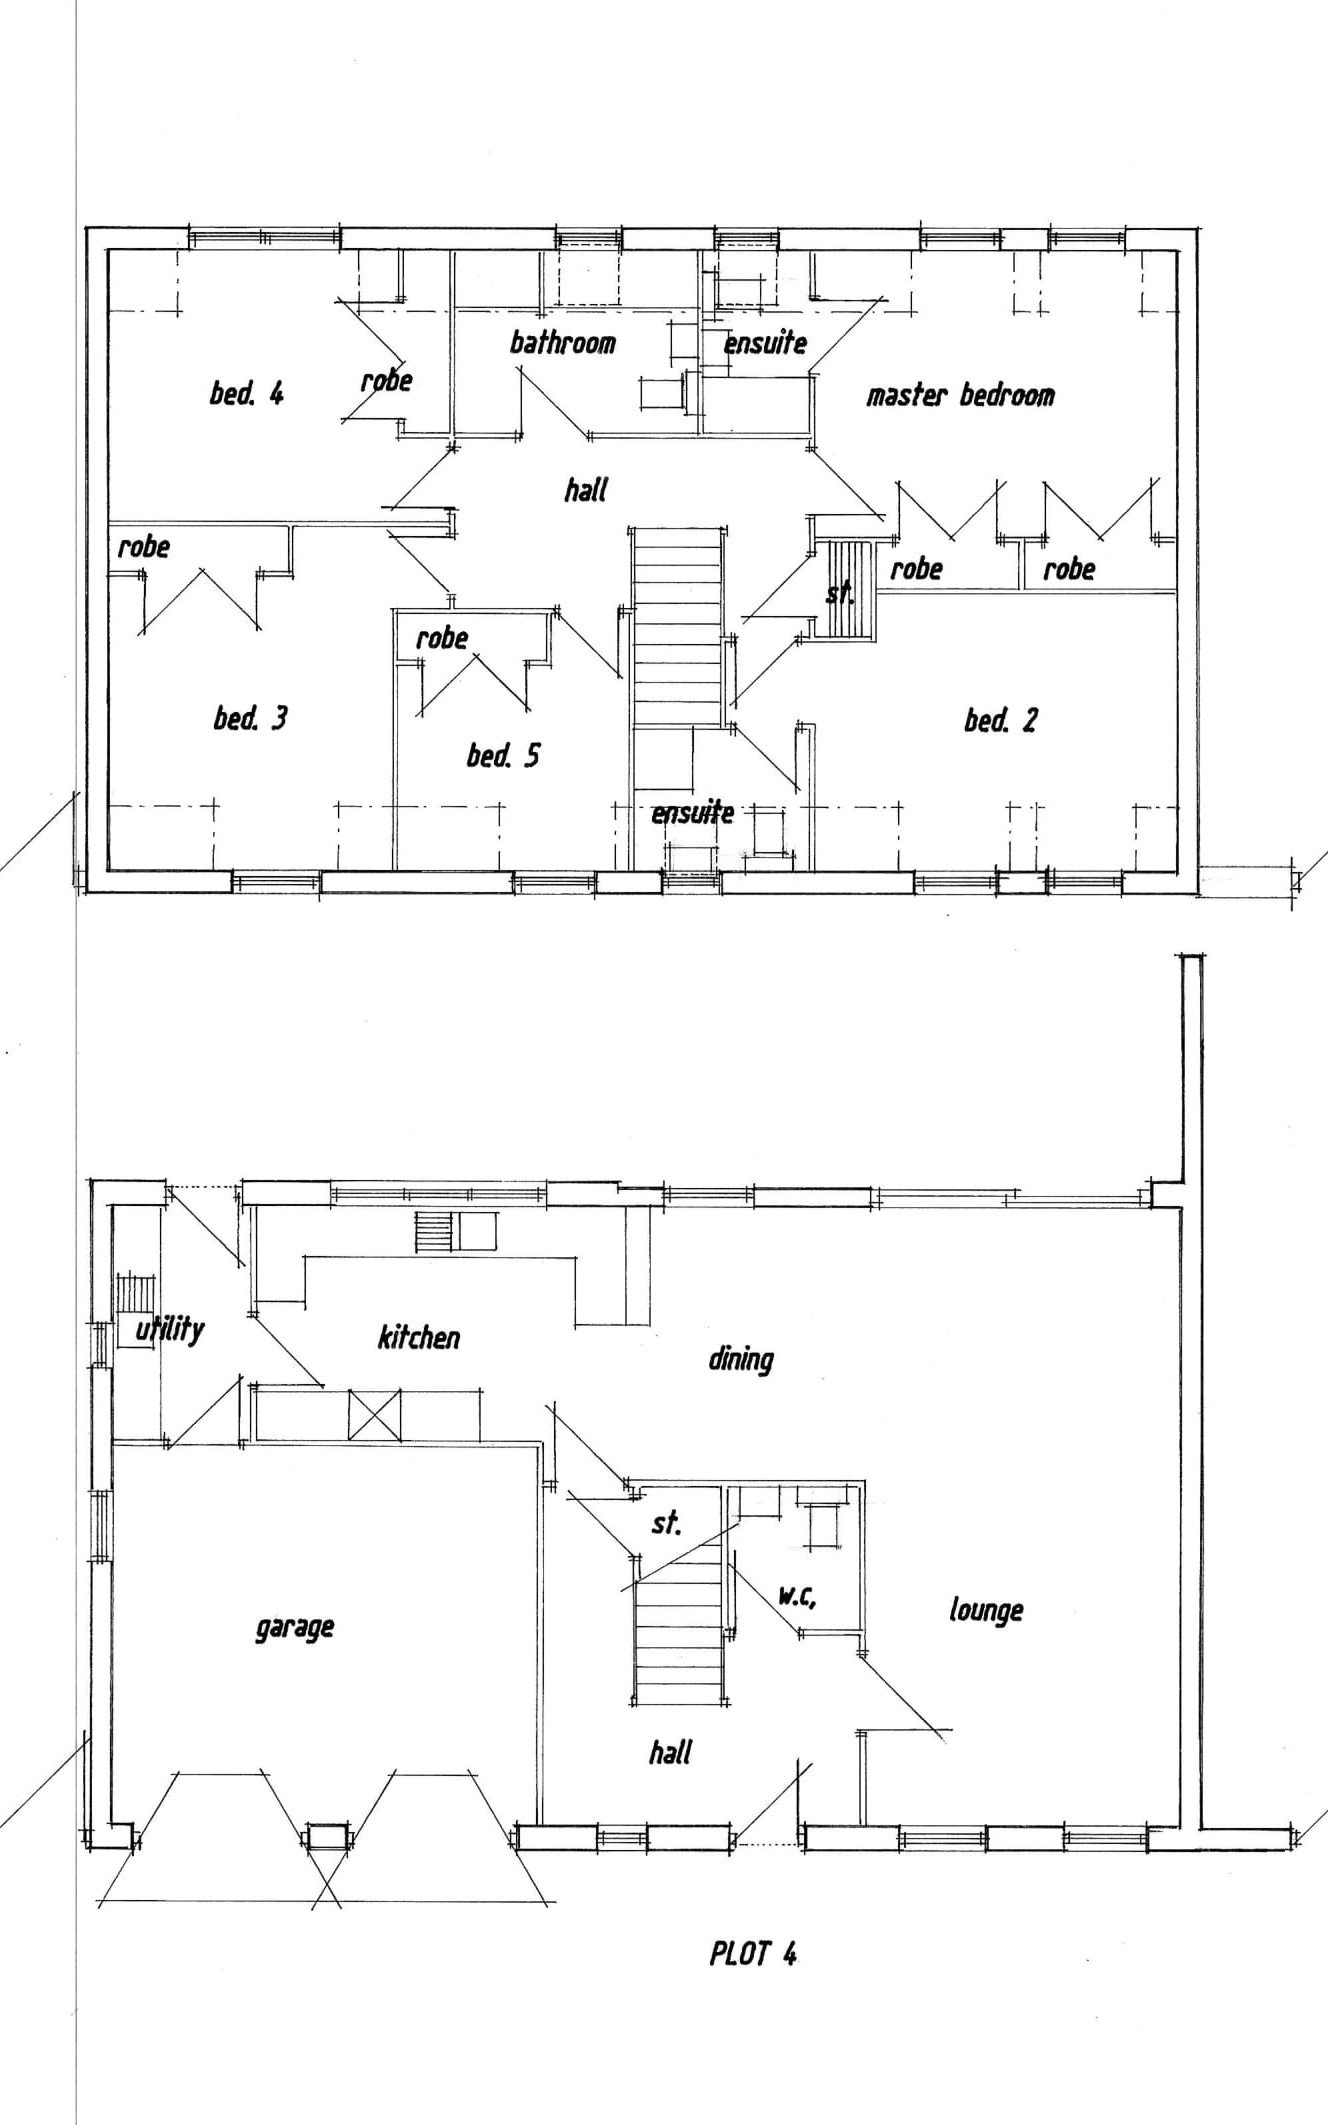 Plot 4 Floor Plans